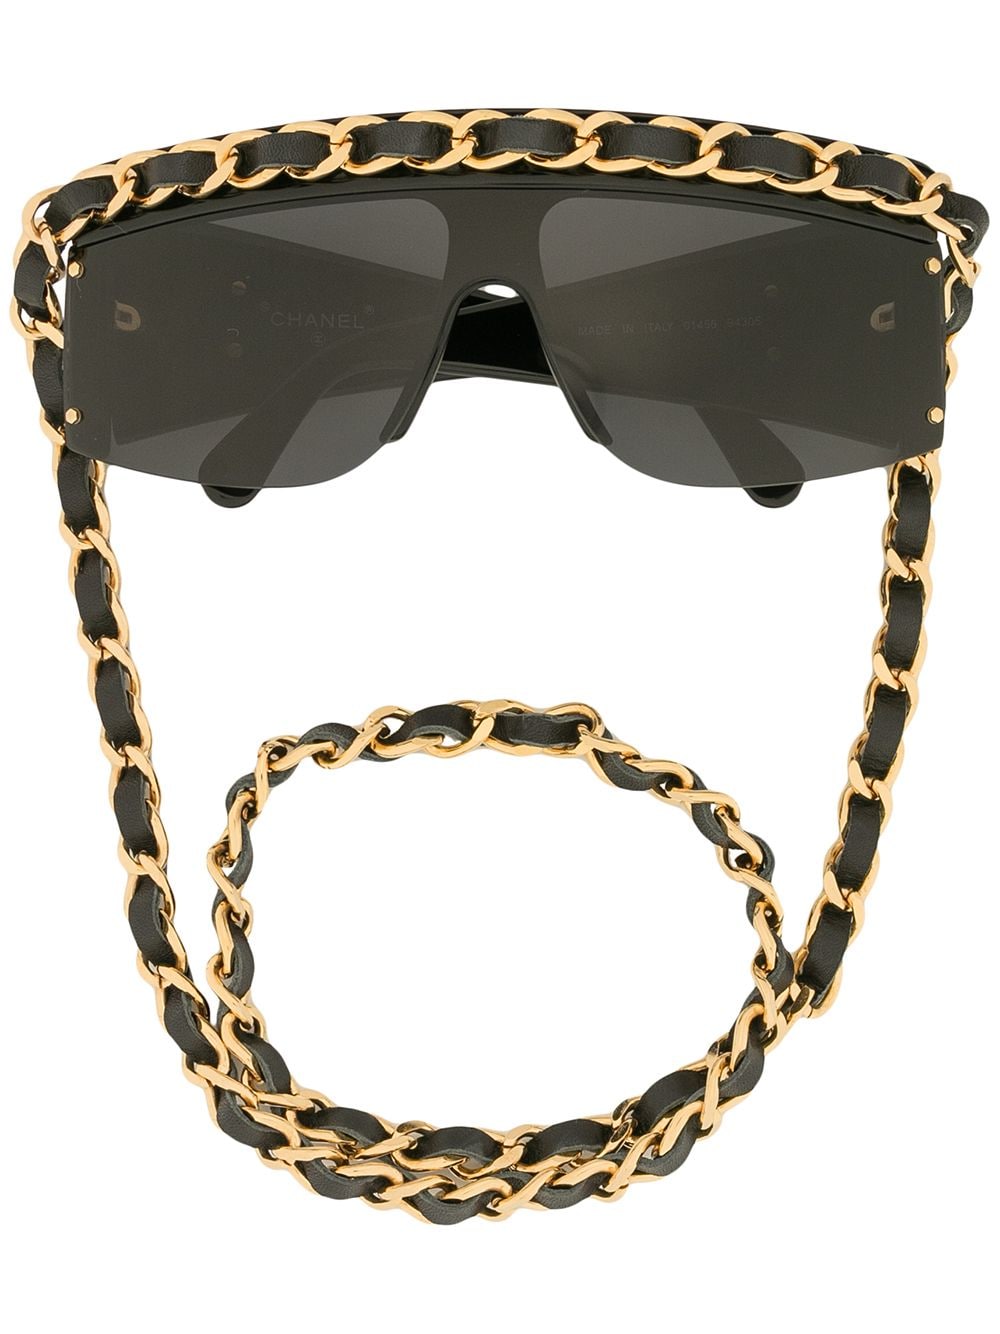 Chanel Chain Sunglasses Eyewear Black Small Good 01456 94305 Auction